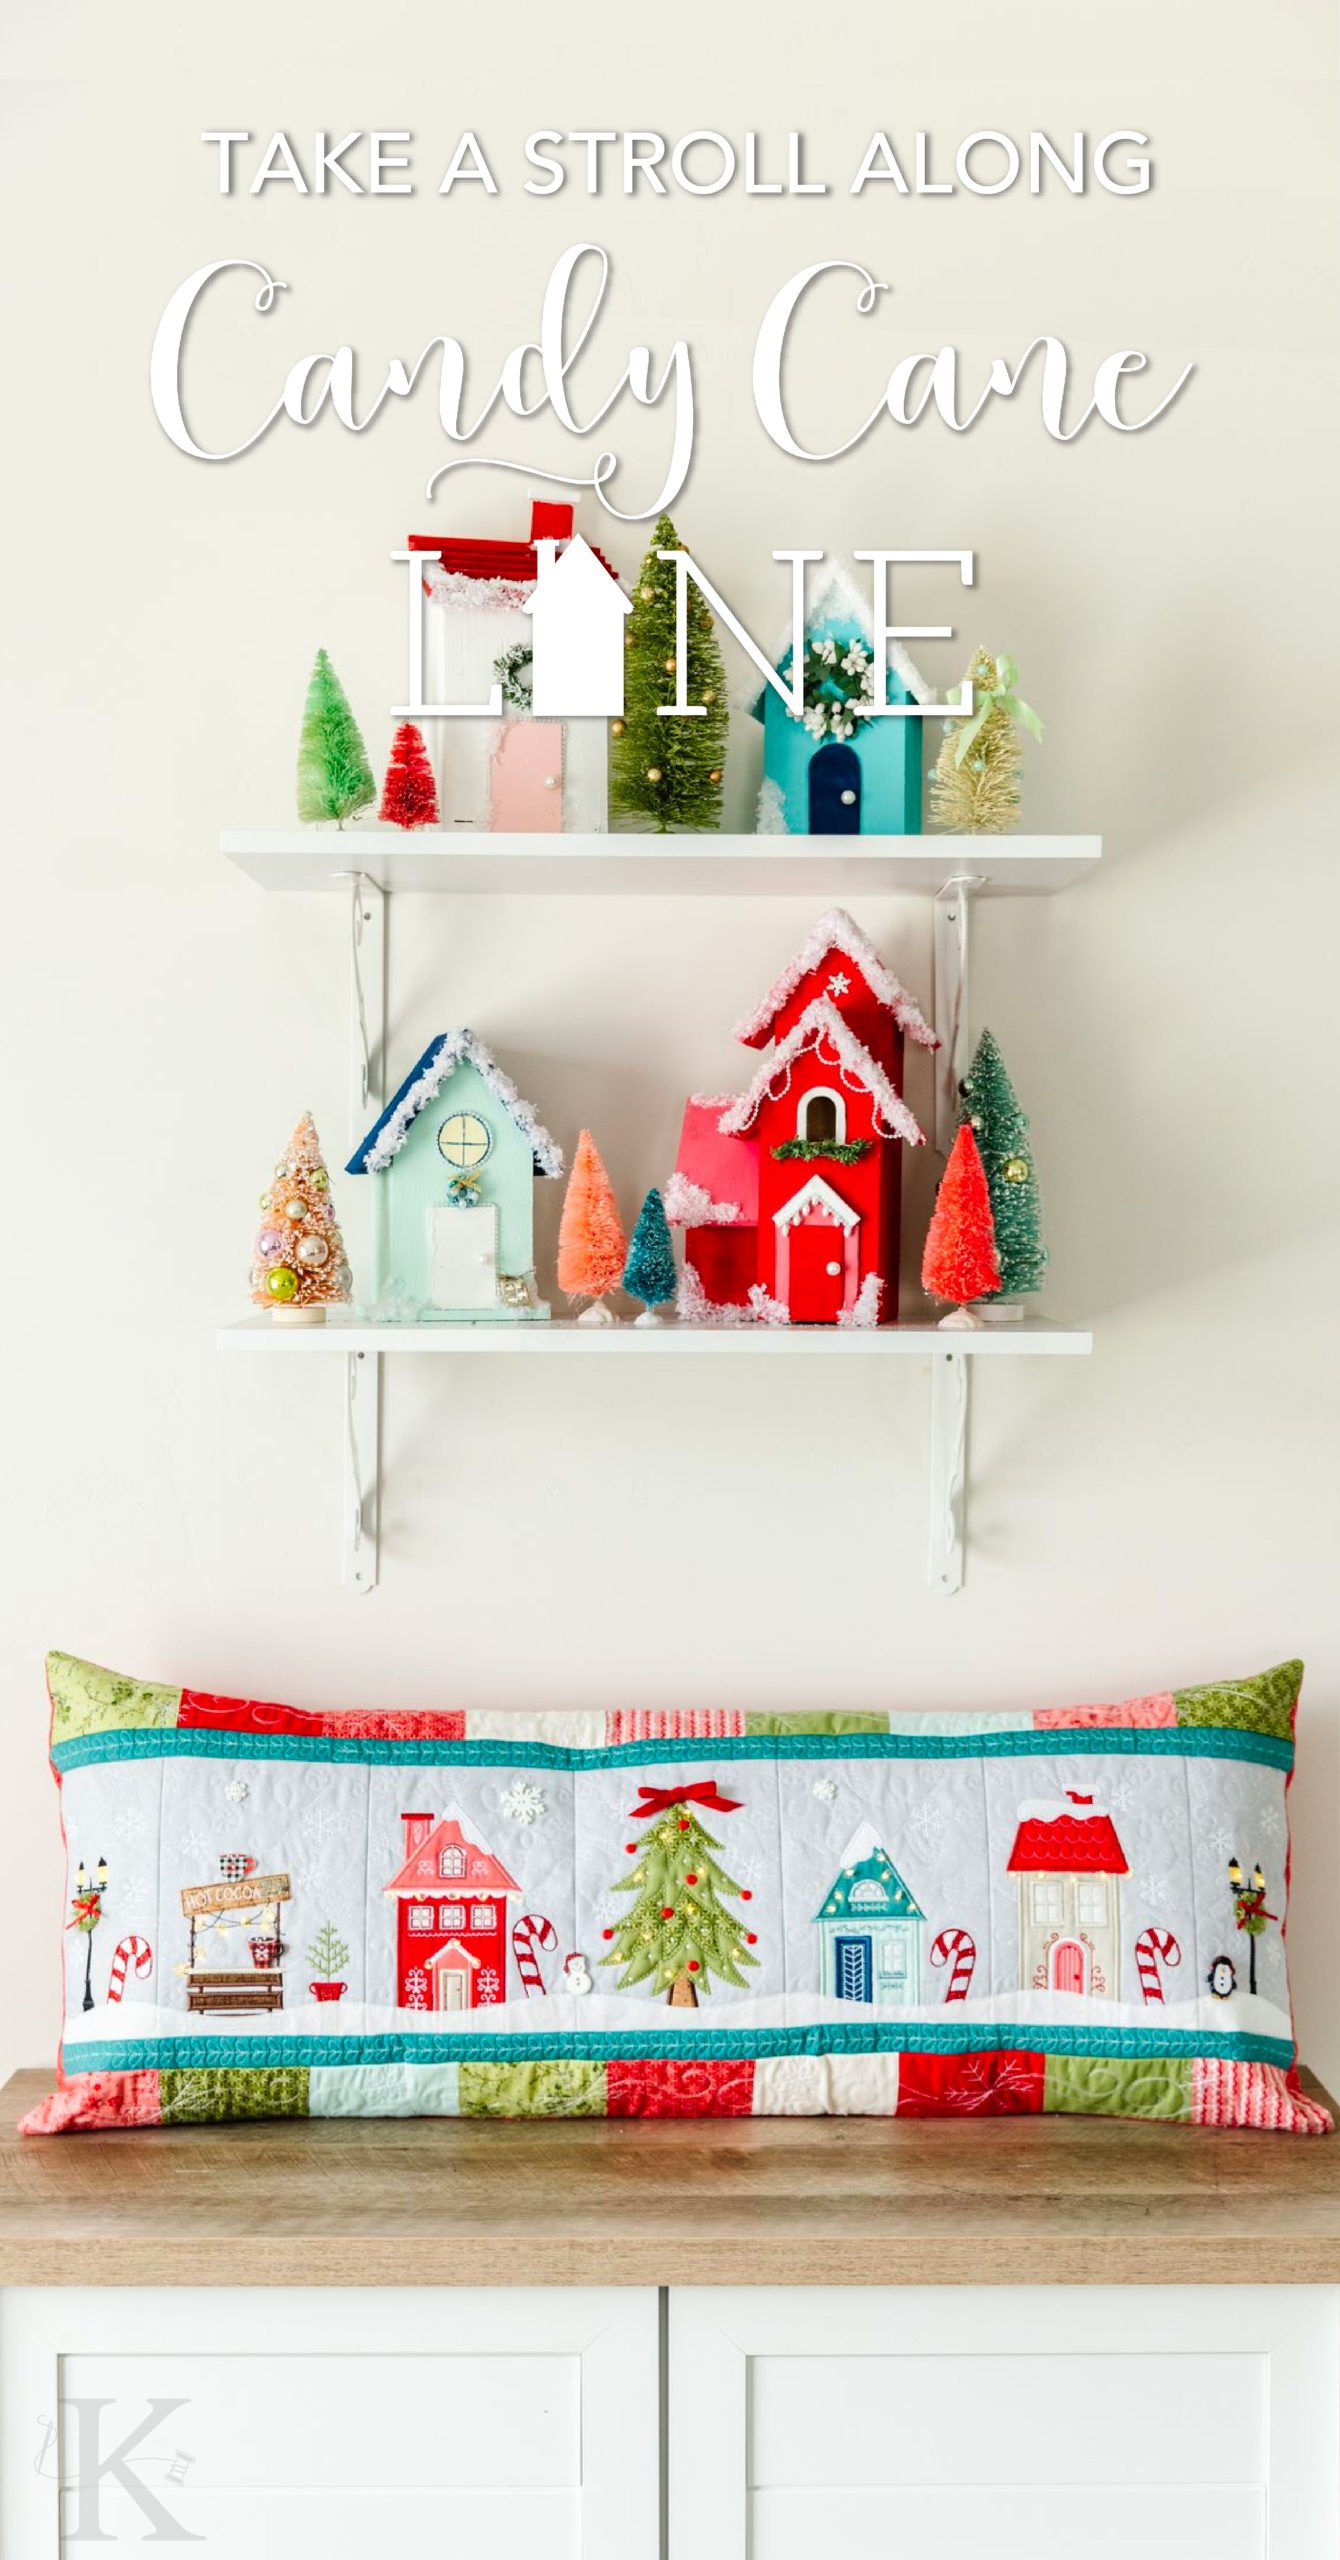 Joy to the WorldIt's Kimberbell's Nativity Bench Pillow!